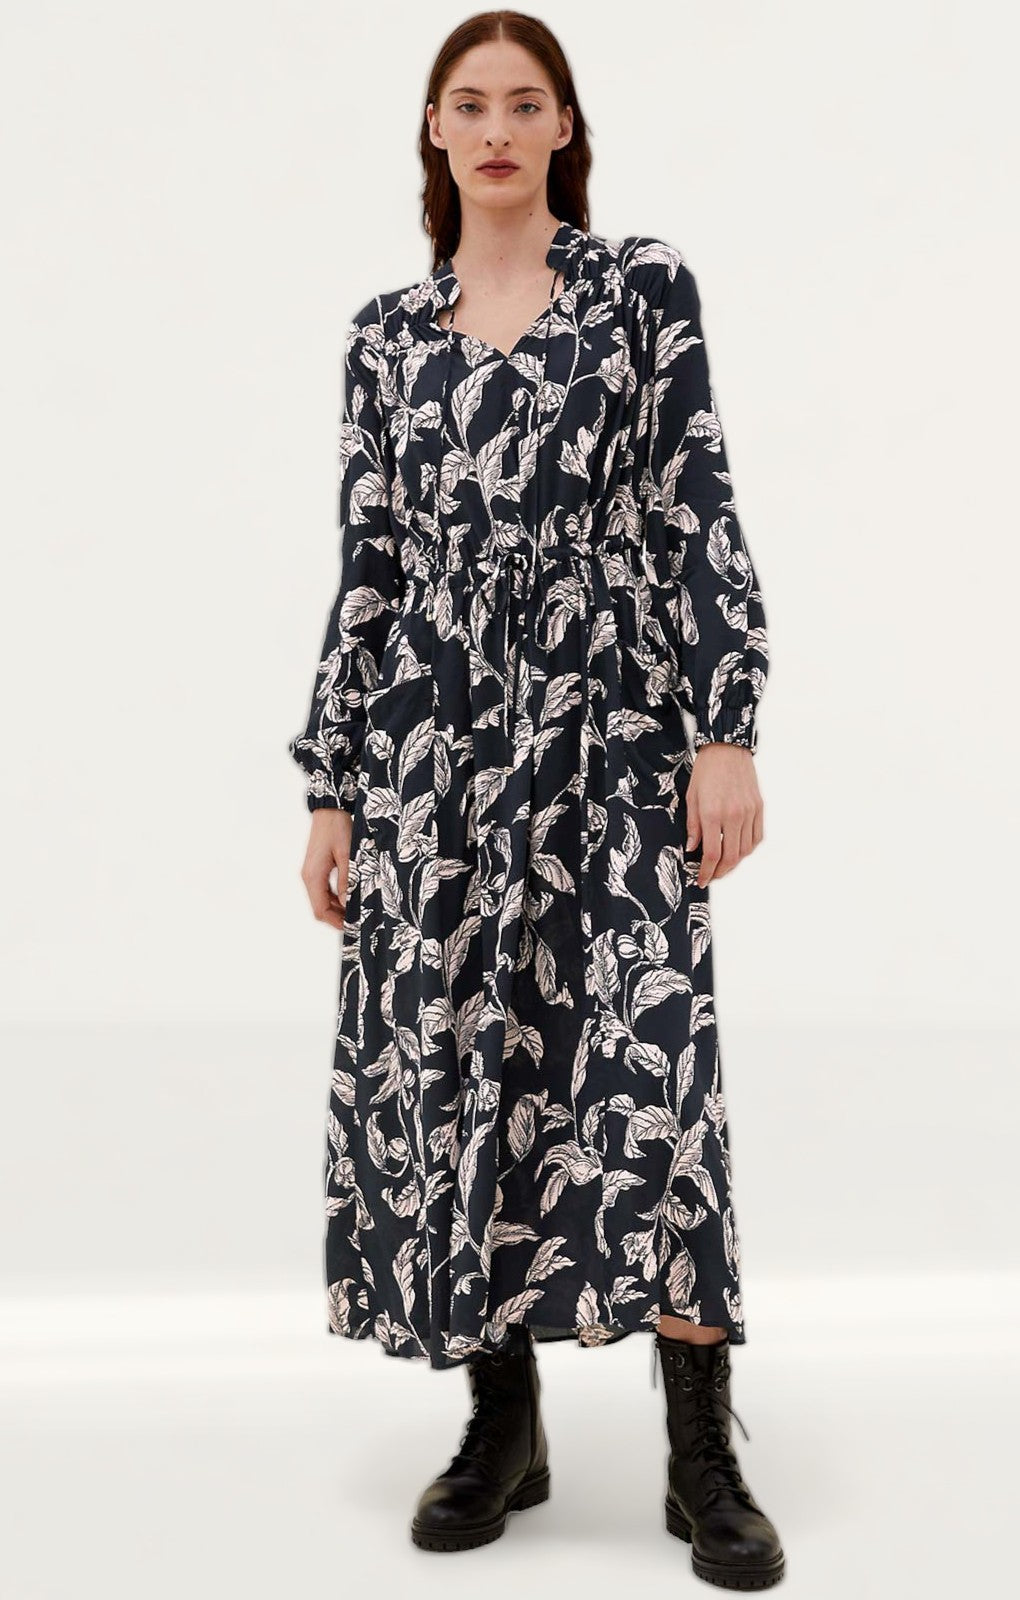 M&S Trailing Leaf Printed Midaxi Dress product image